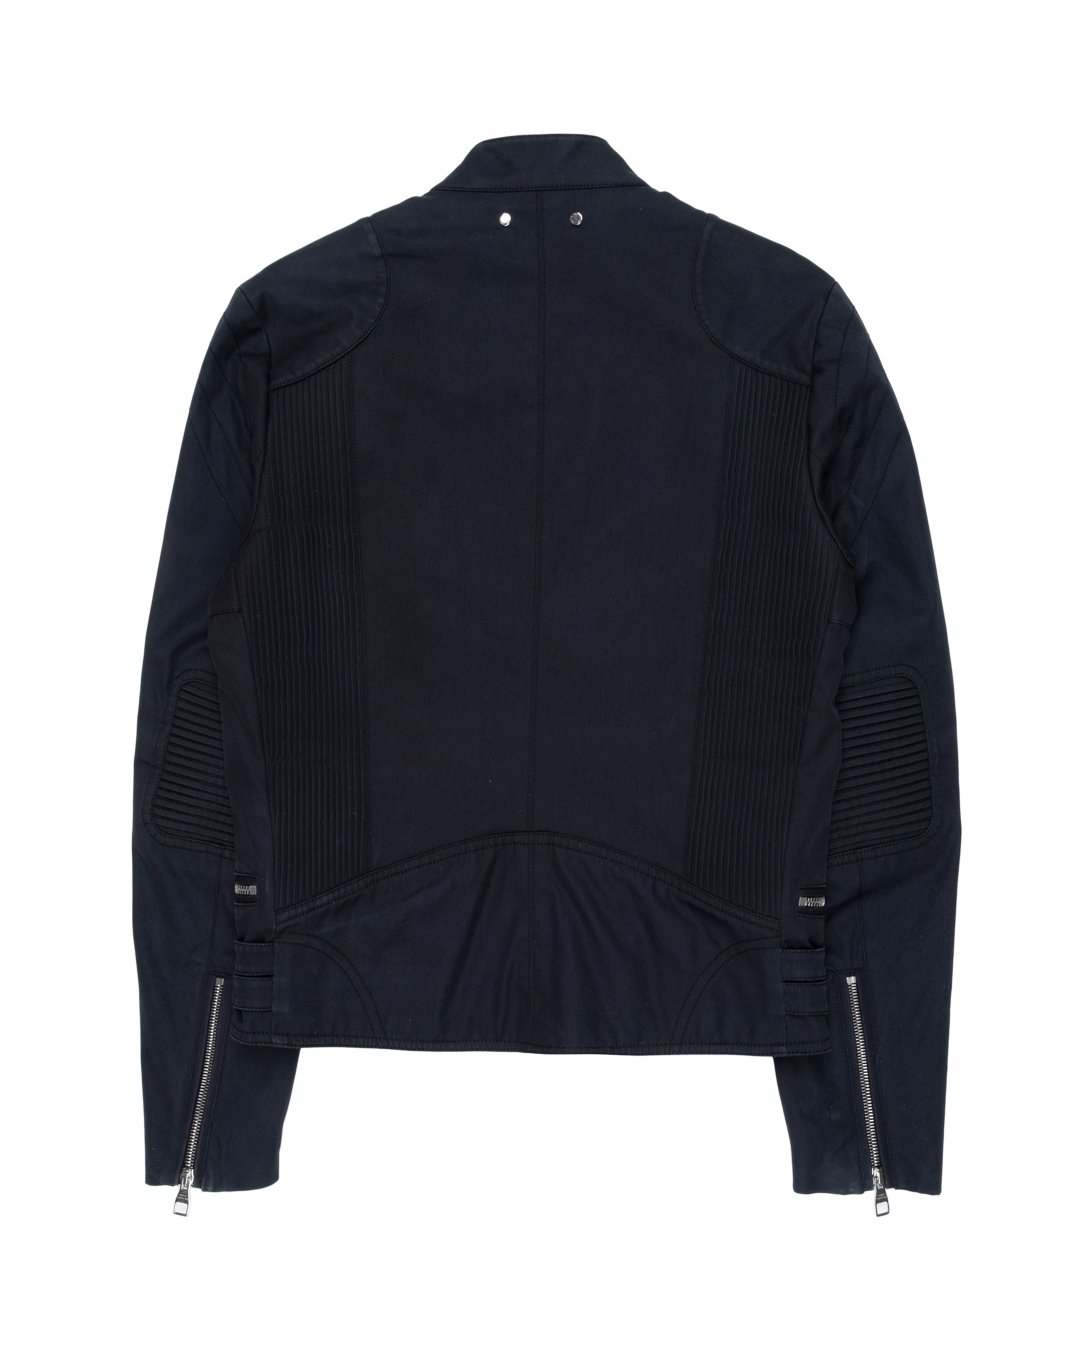 Louis Vuitton Men's Biker Jacket